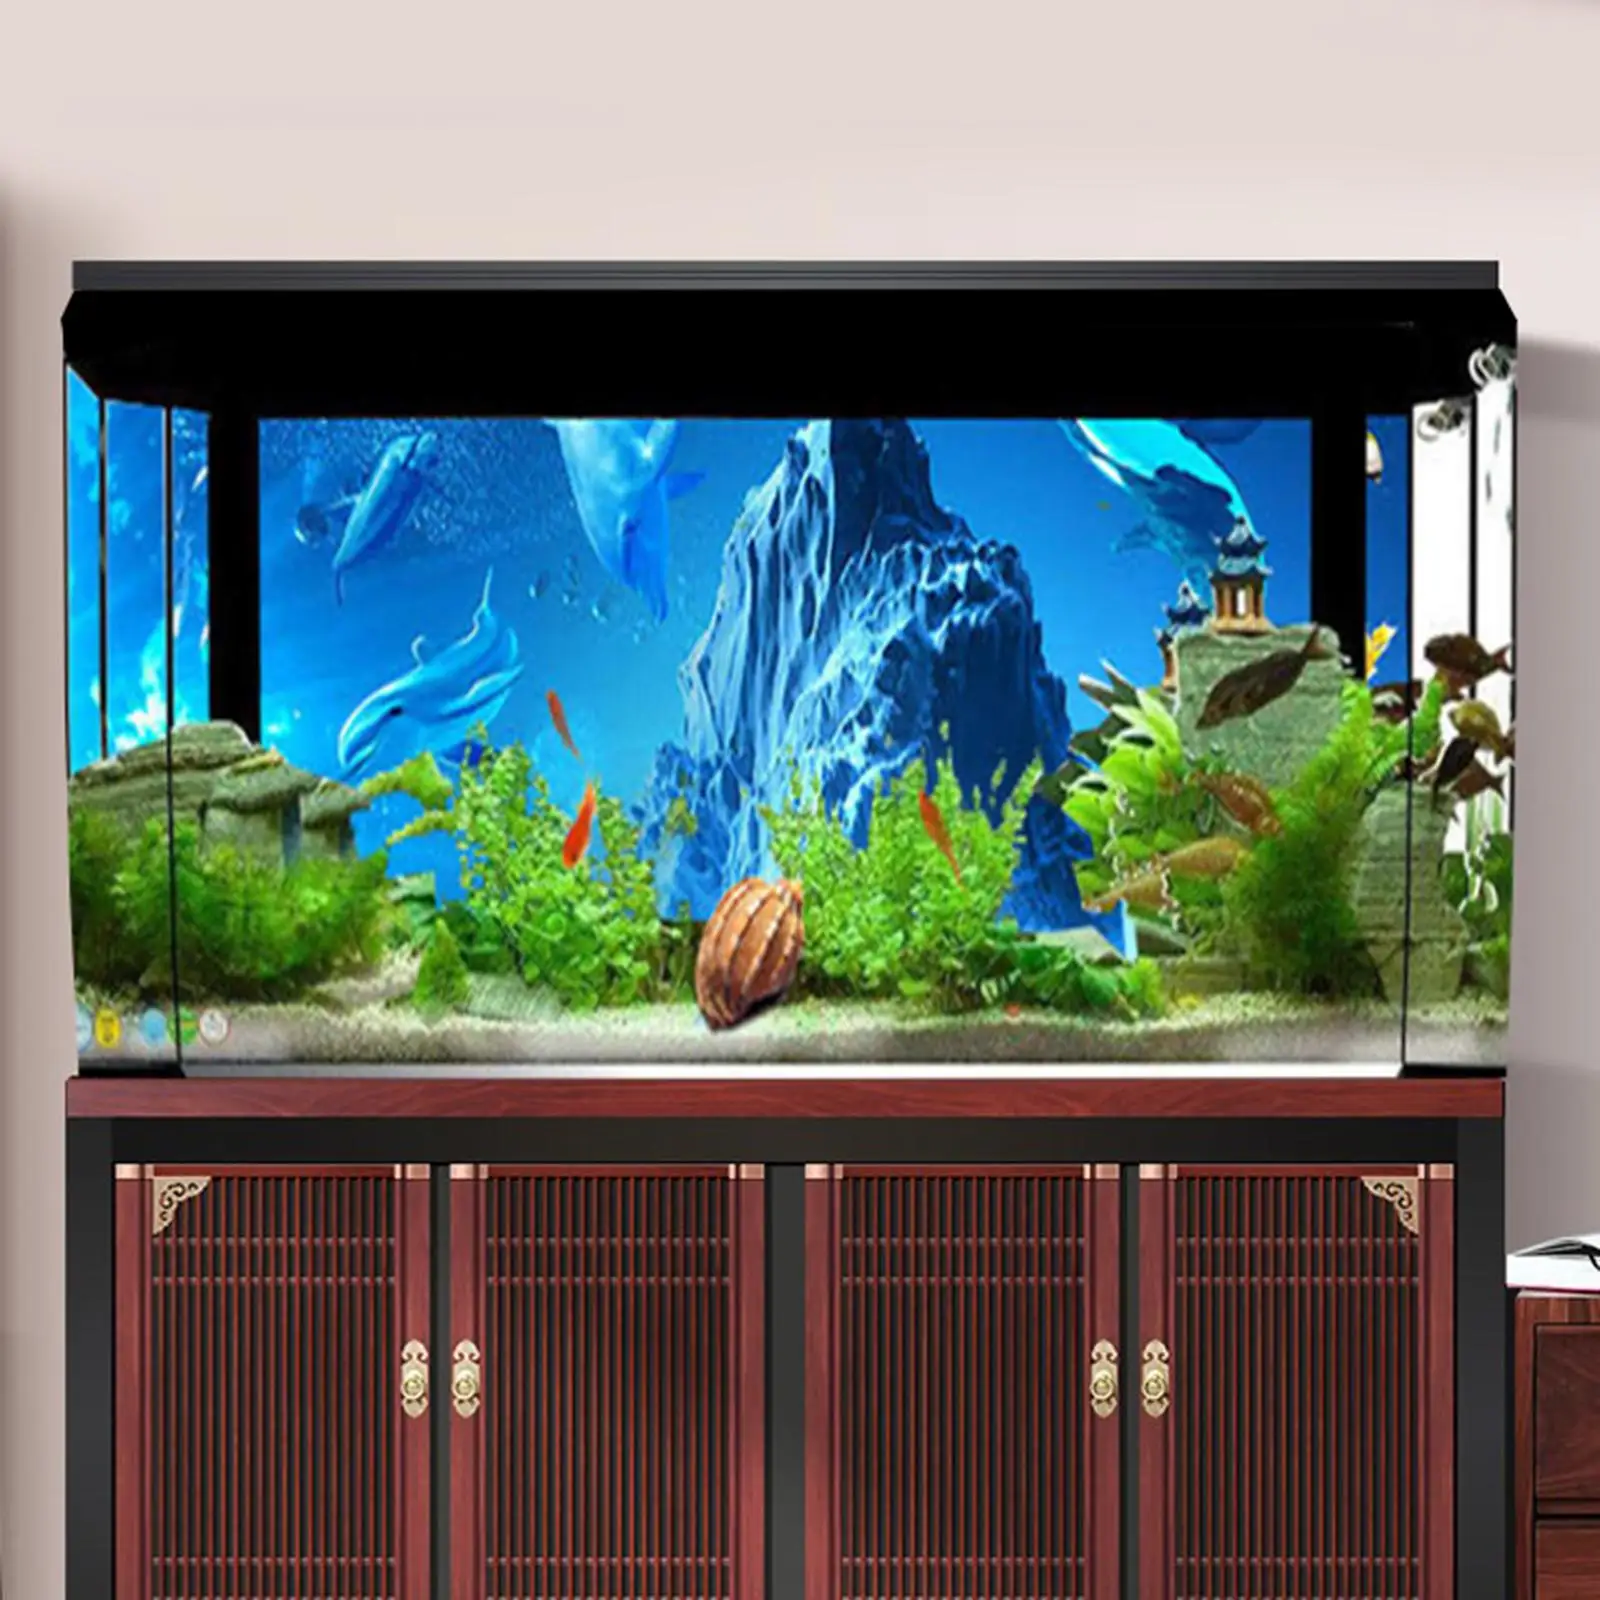 Aquarium Landscape Sticker Poster Fish Tank 3D Background Sticker Ocean Sea Plants Aquarium Decor Accessories